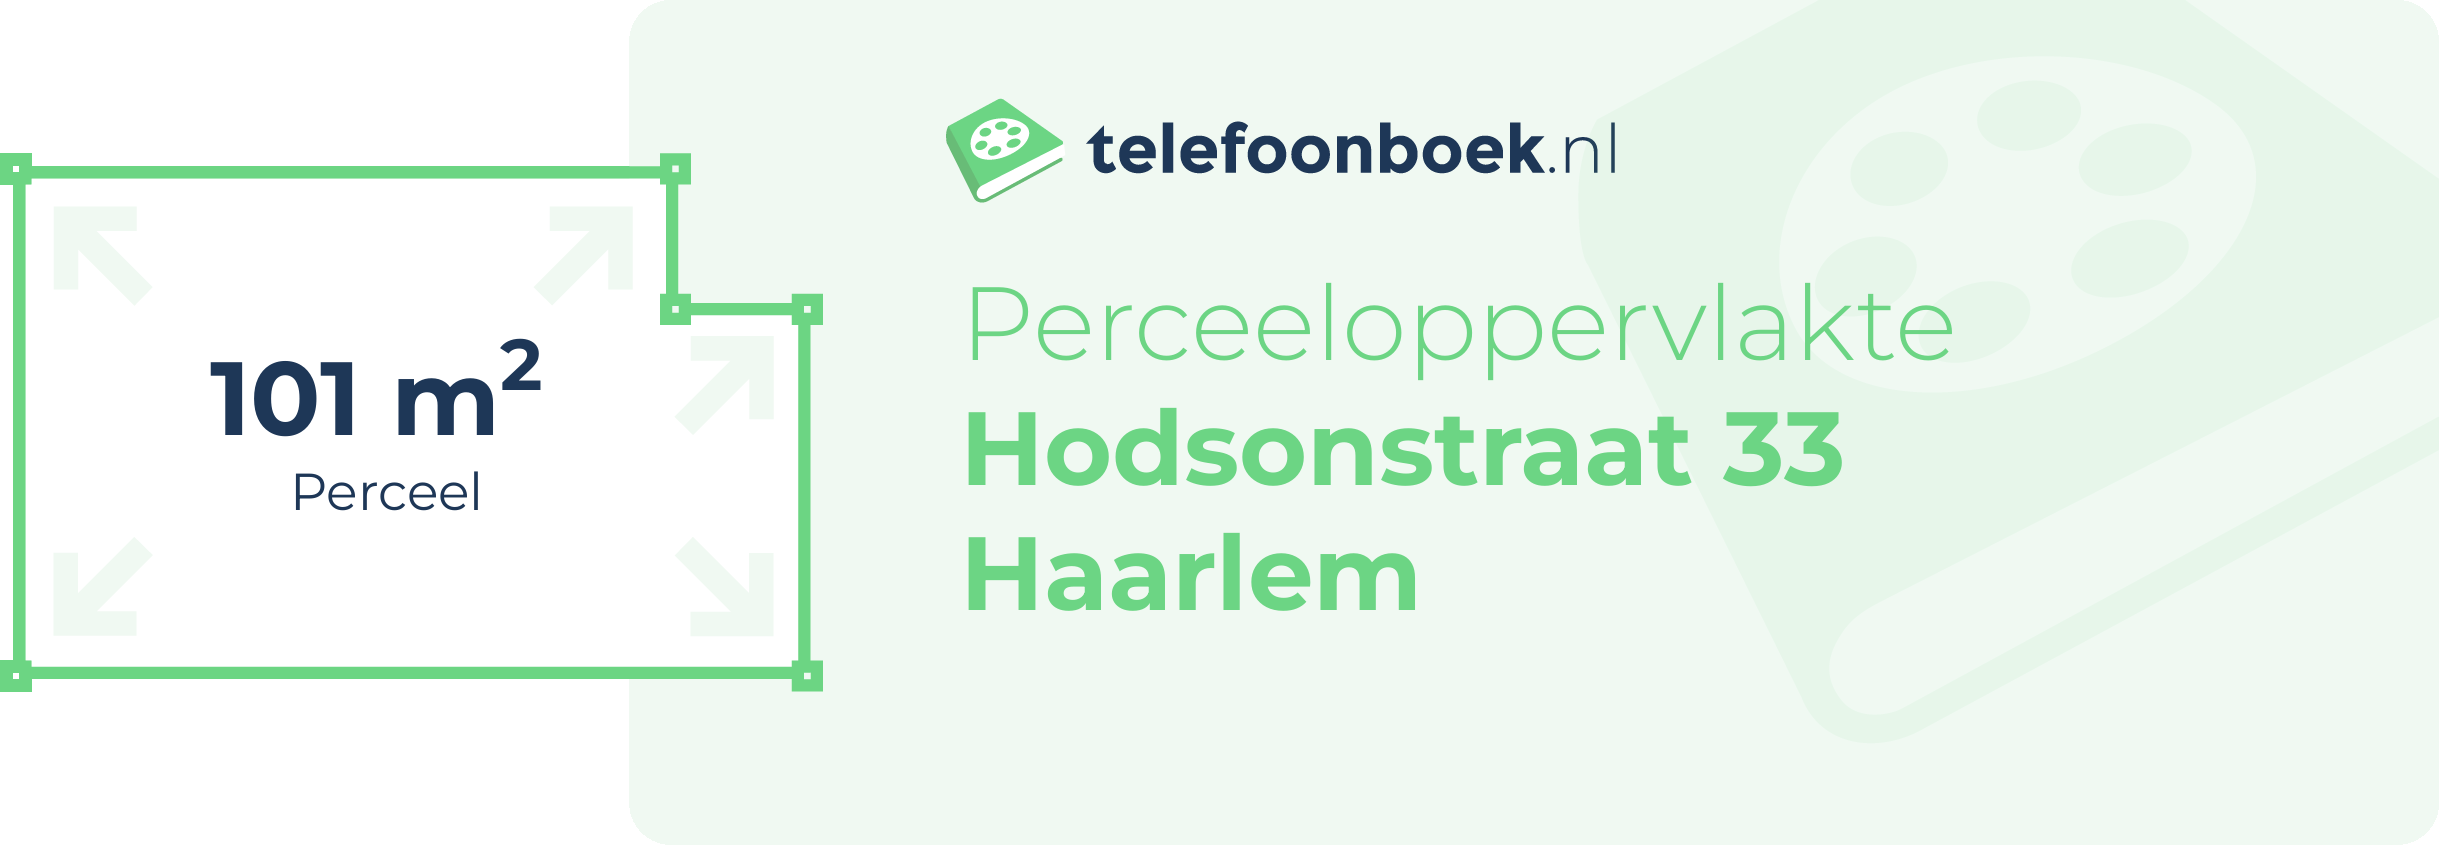 Perceeloppervlakte Hodsonstraat 33 Haarlem